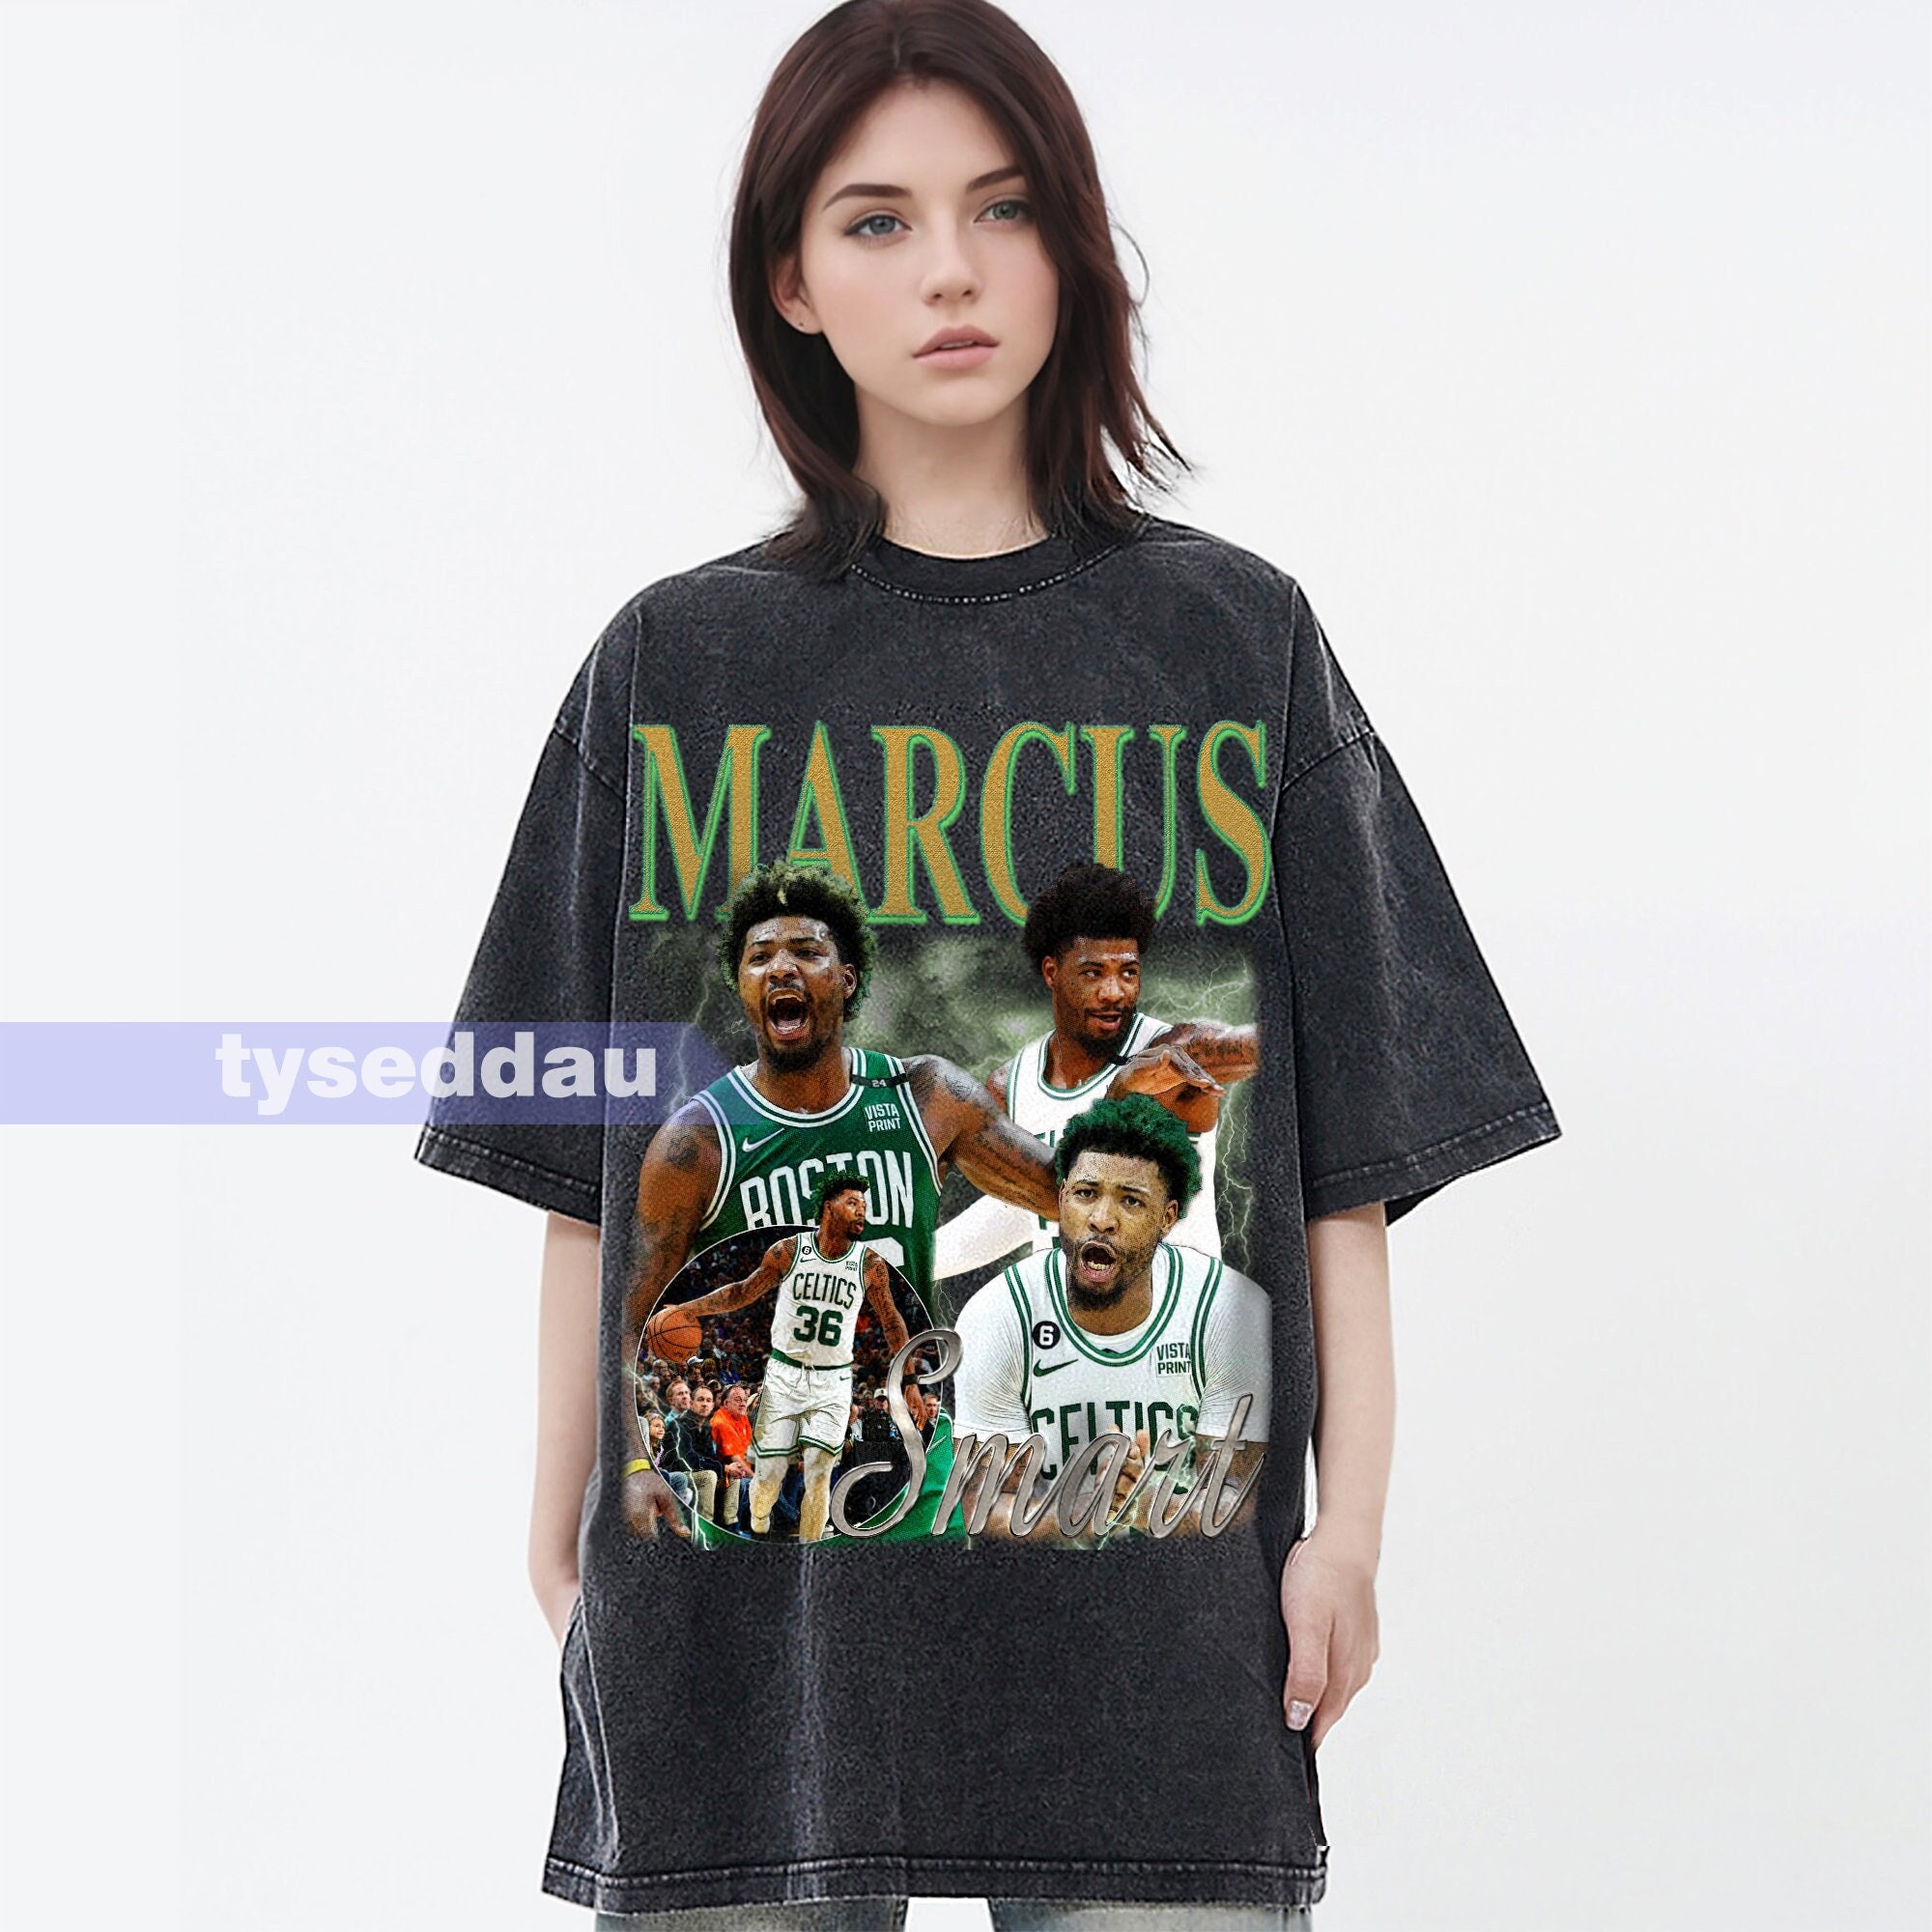 Love _amp_ Trust Marcus Smart of The Boston Celtics  Kids T-Shirt